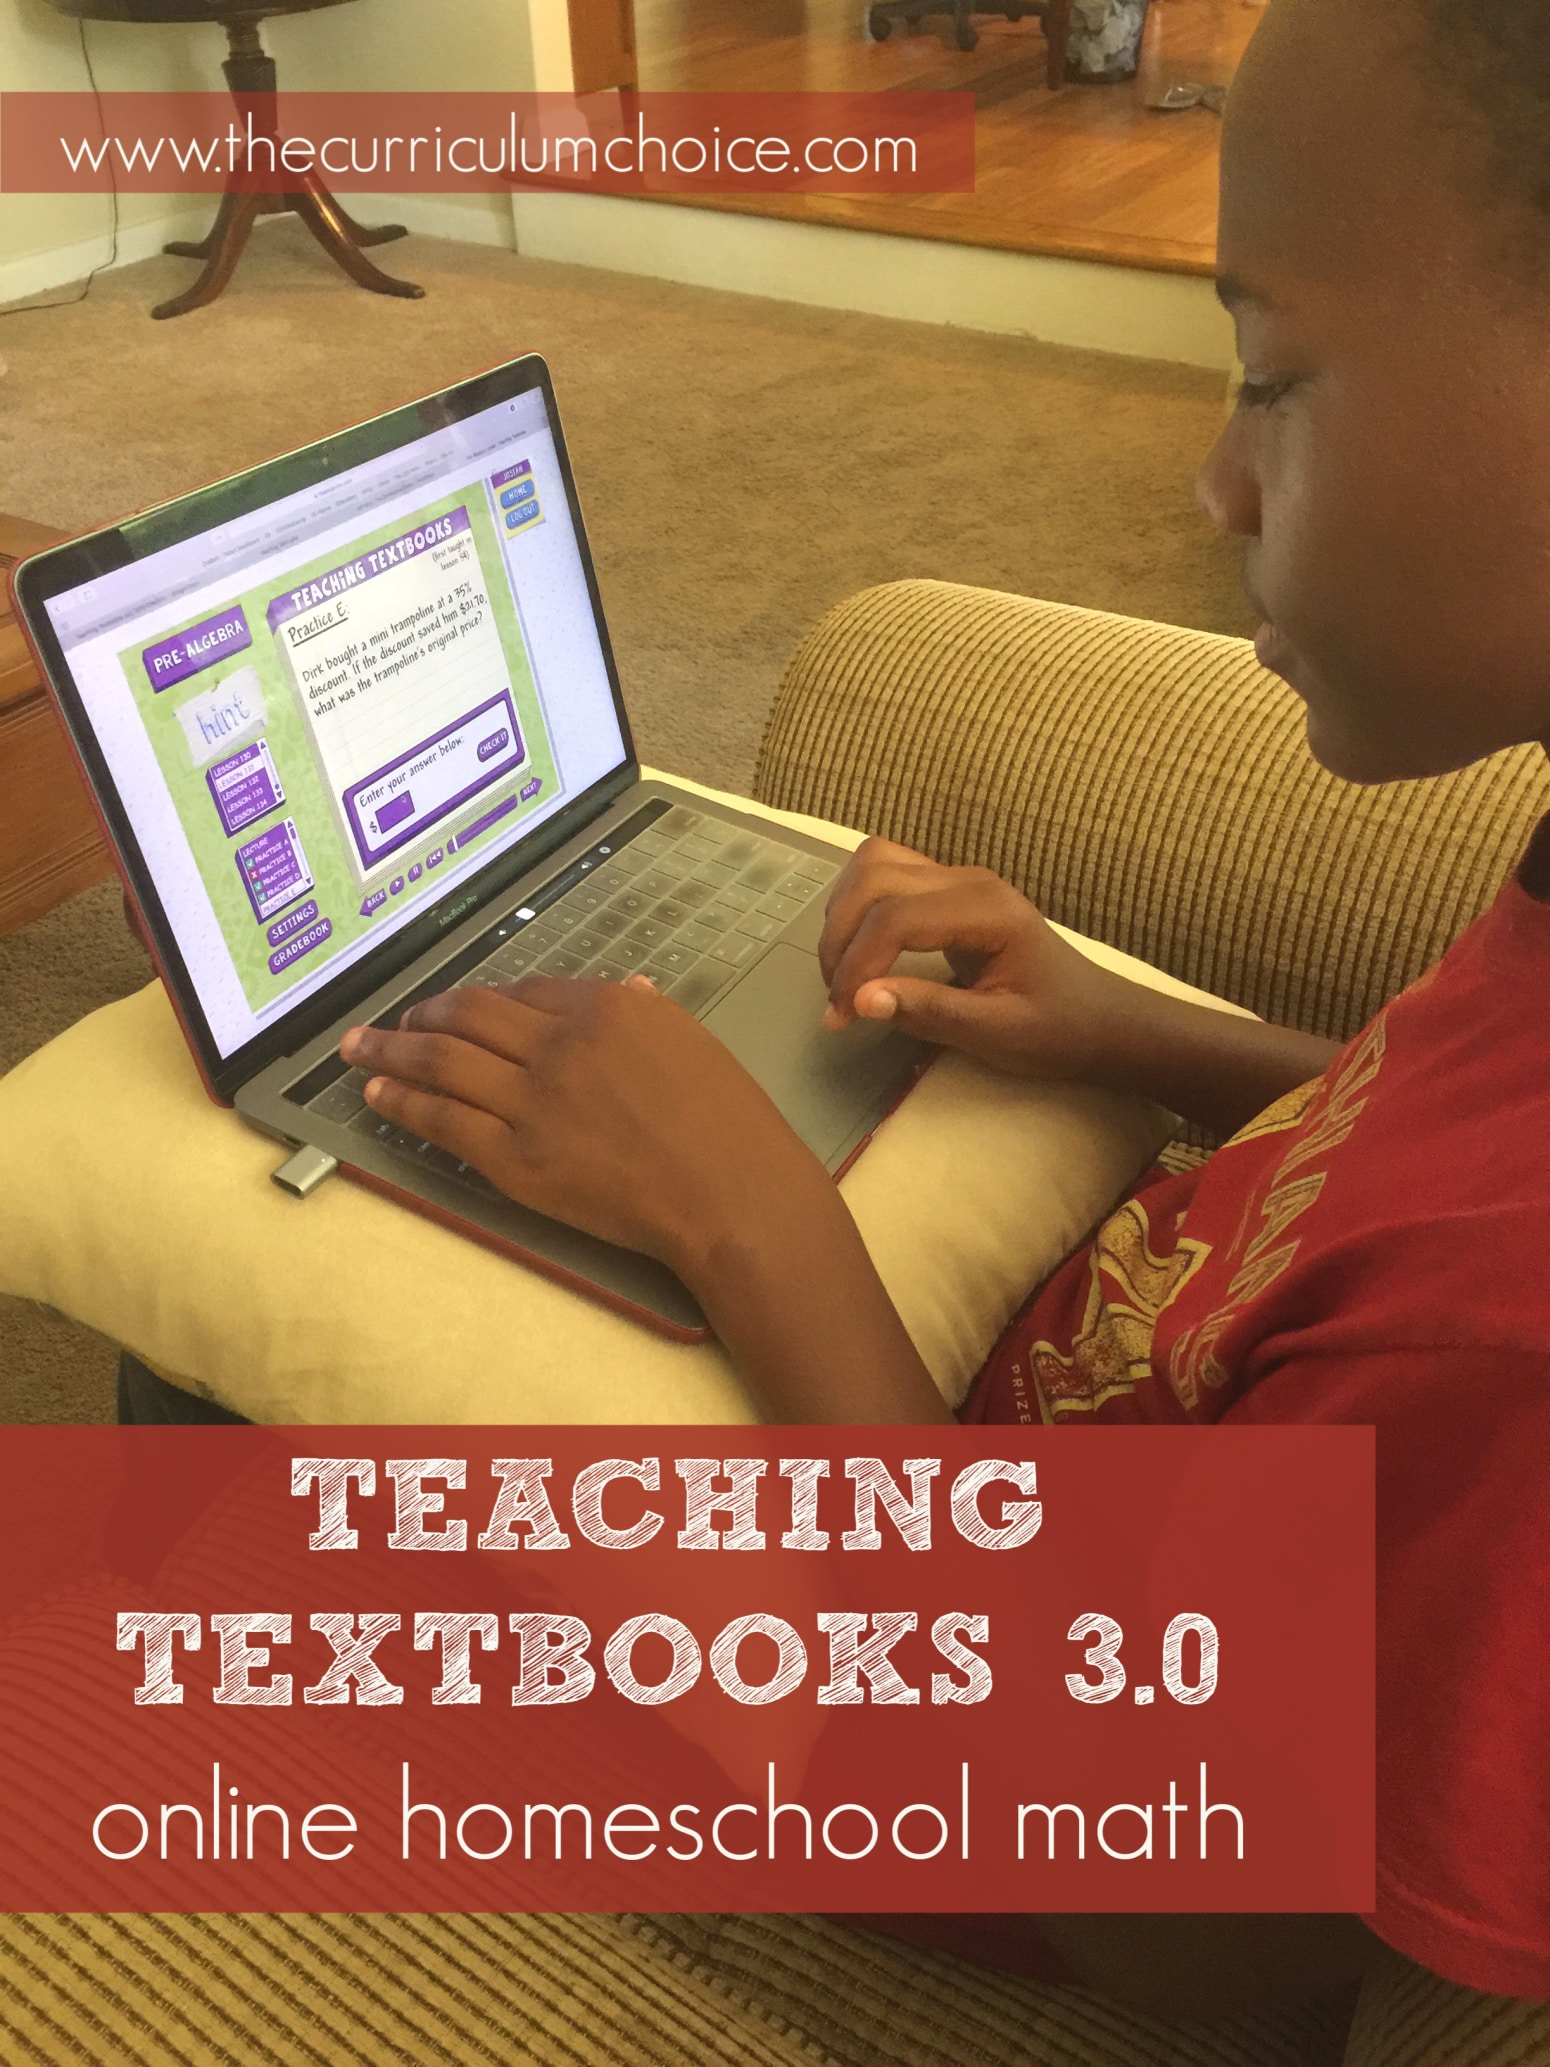 Online Homeschool Math with Teaching Textbooks 3.0